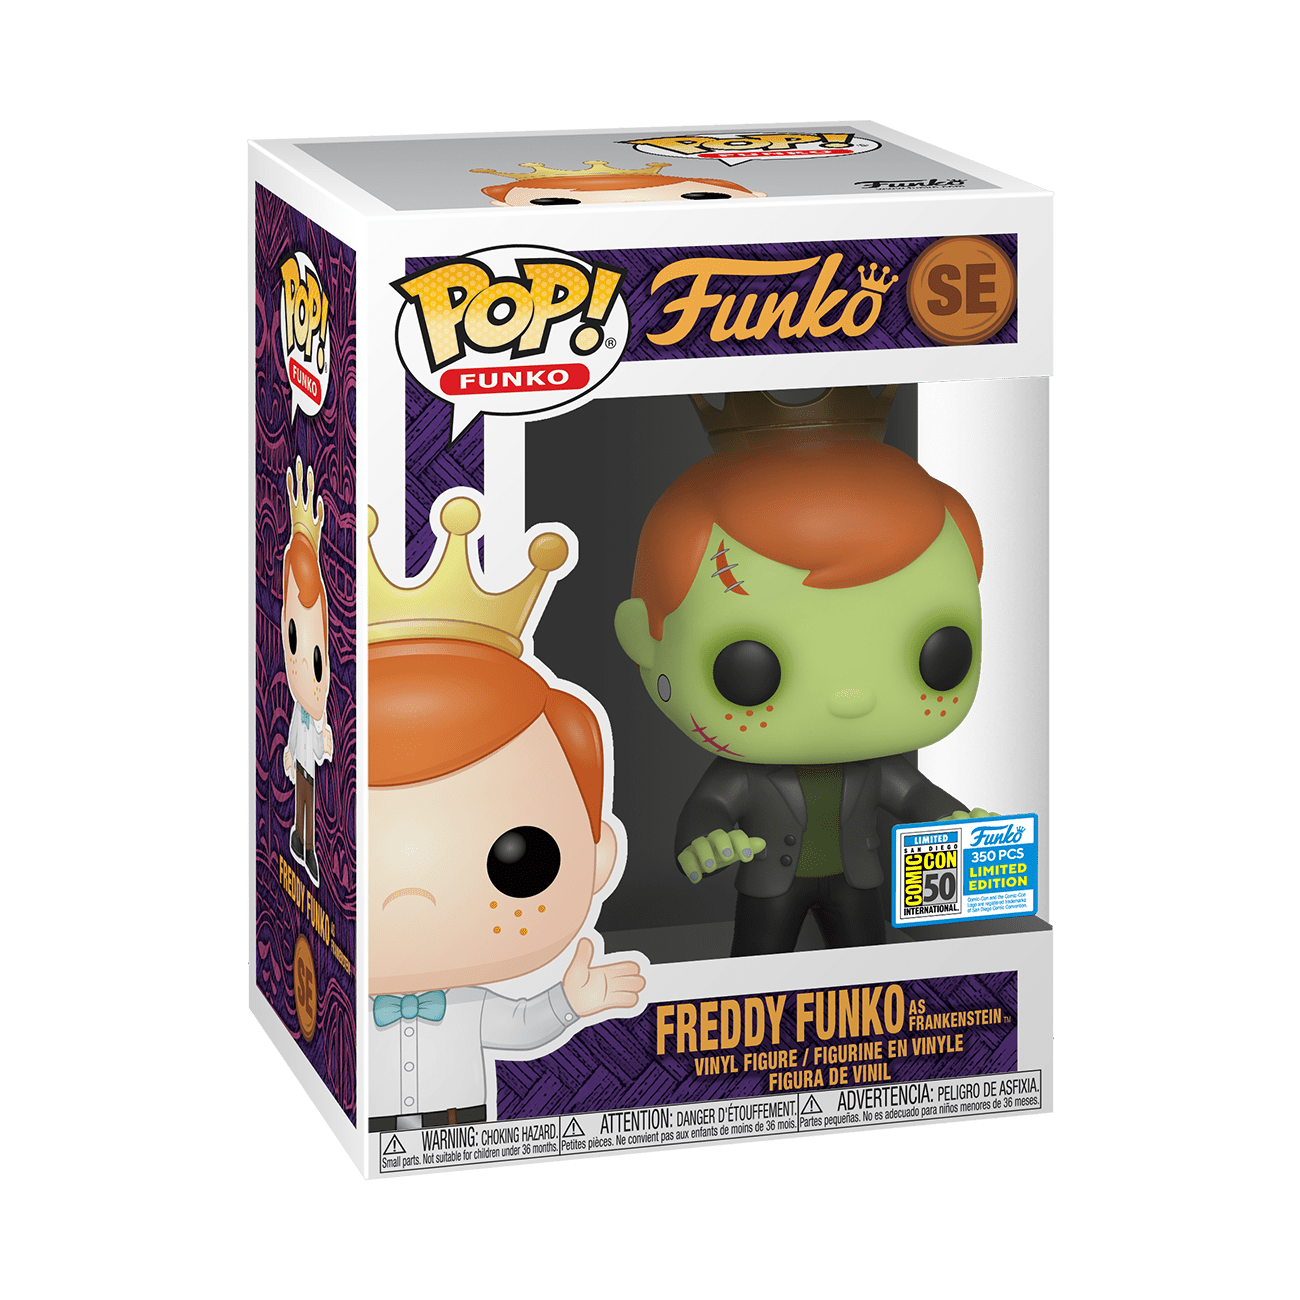 Funko Pop! Freddy Funko as Frankenstein (Freddy Funko)